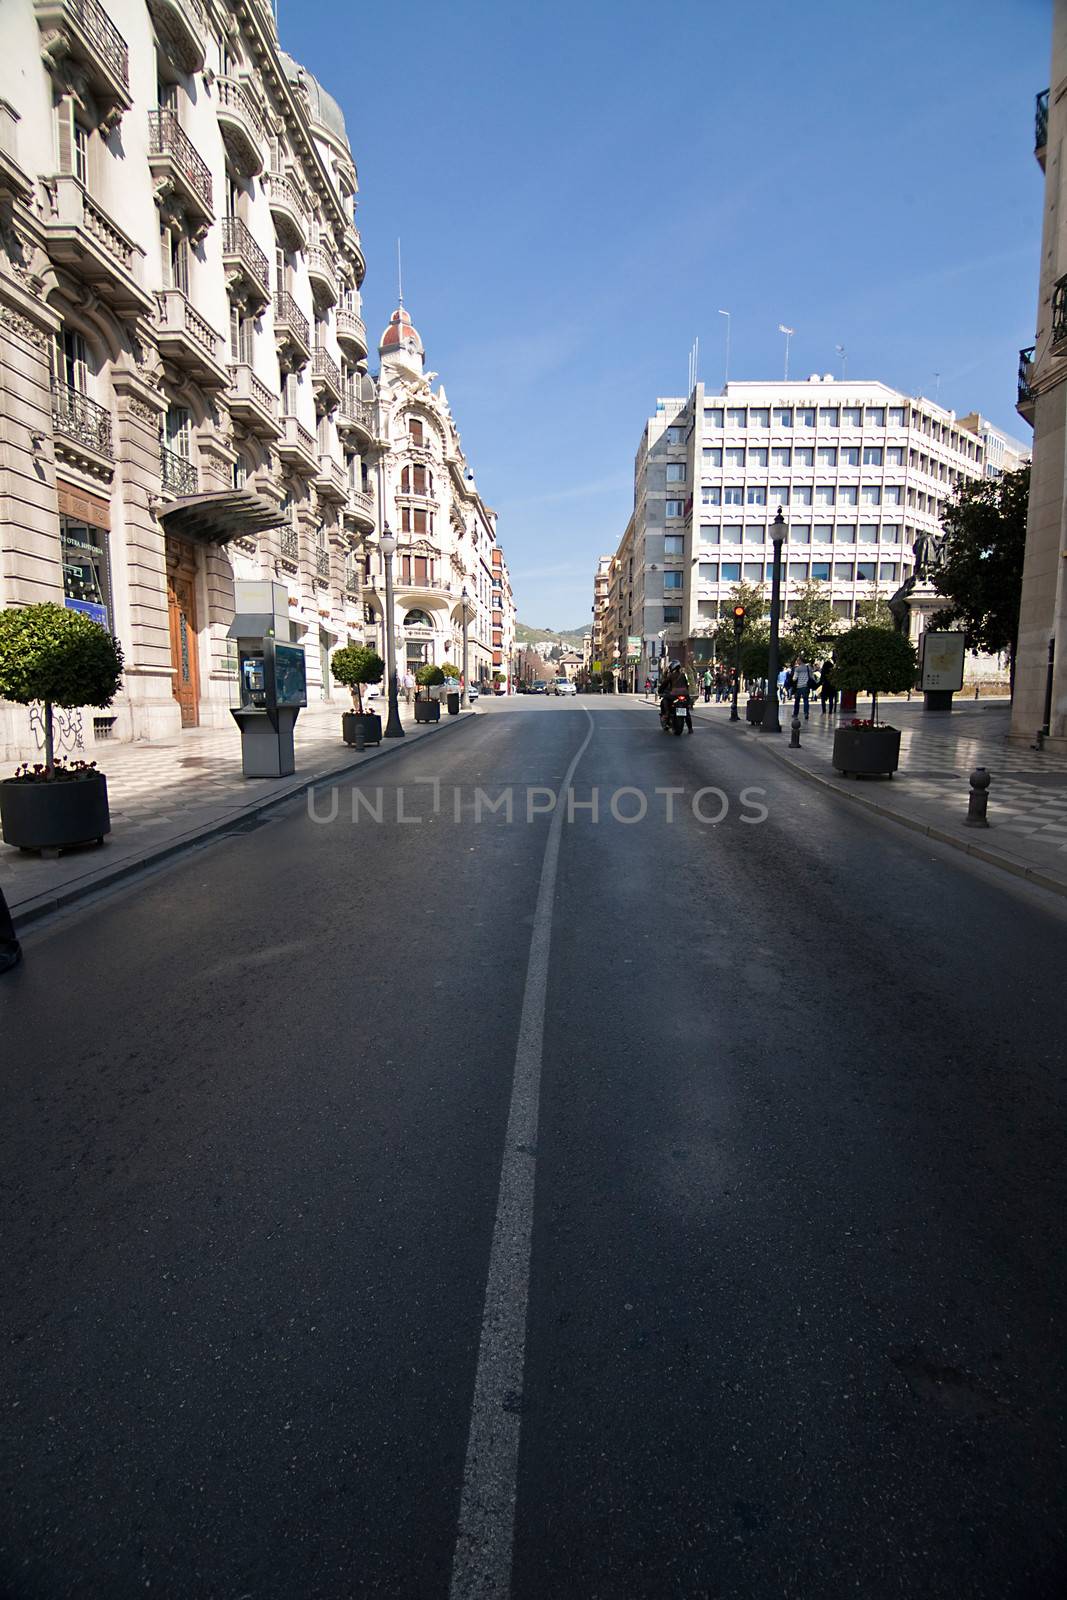 Reyes Catolicos street, Granada, Spain by digicomphoto